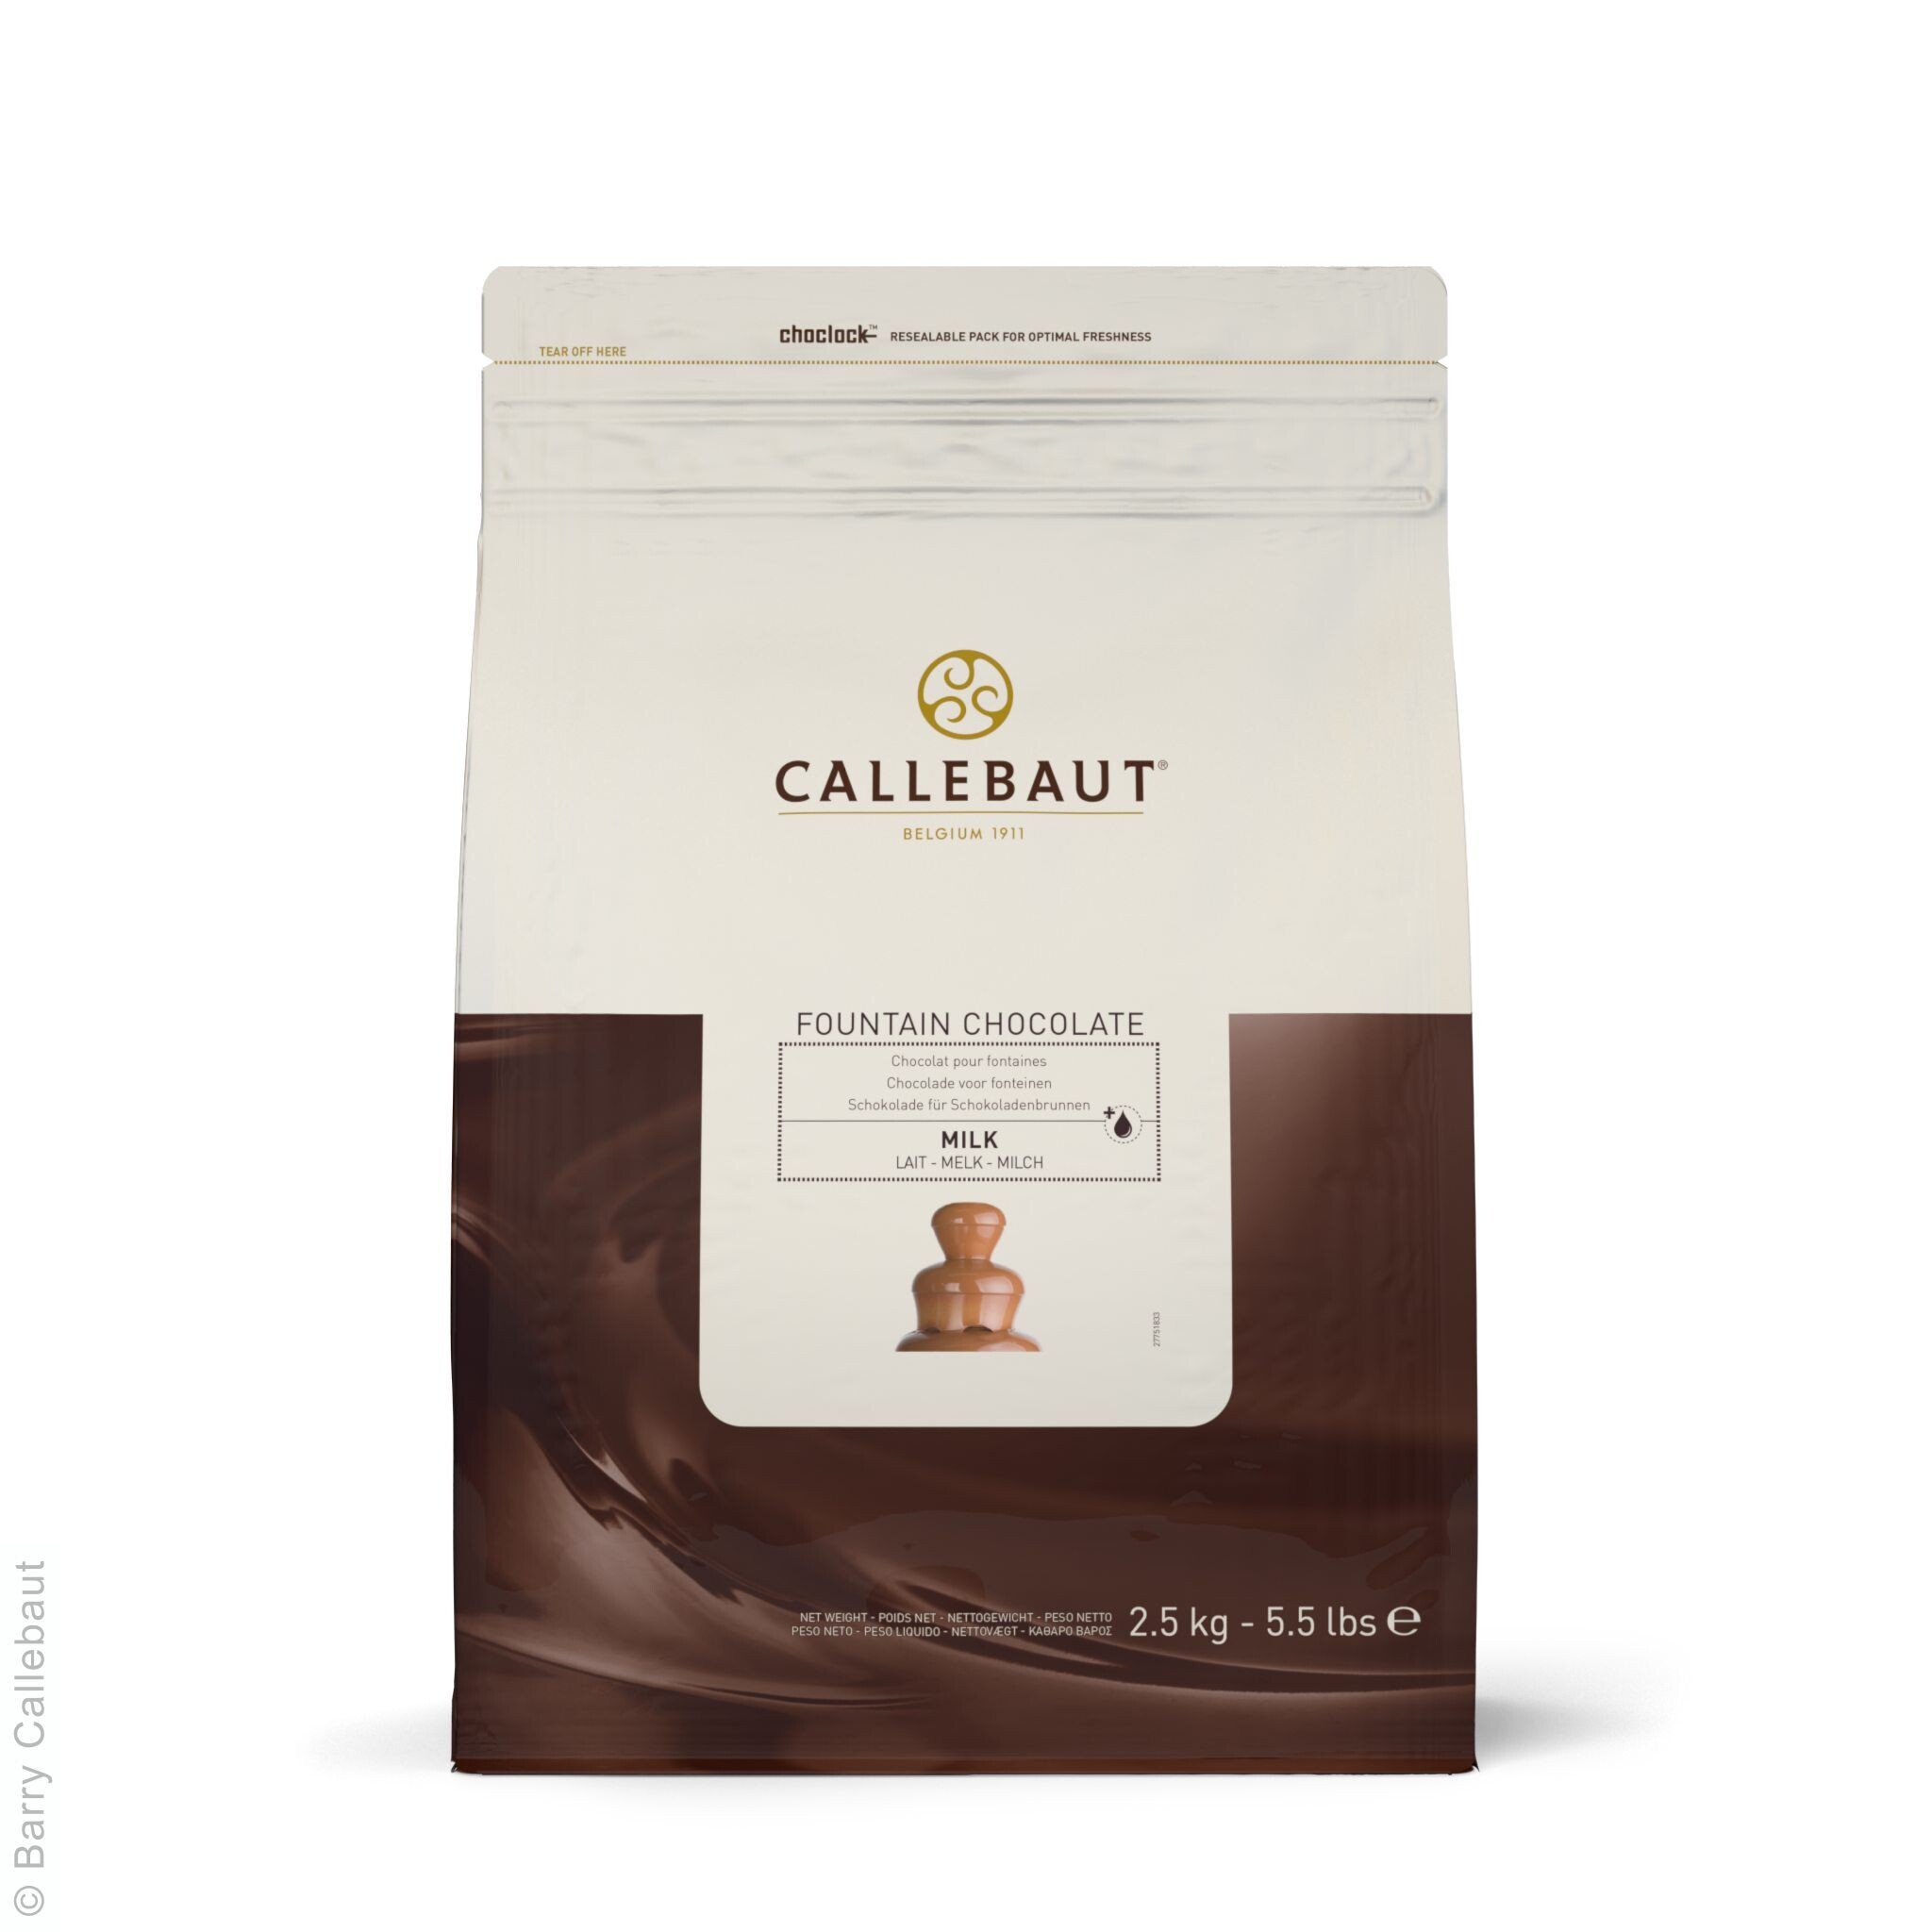 Barry Callebaut Fountain Chocolate Milk 2,5kg 5.5lbs callets